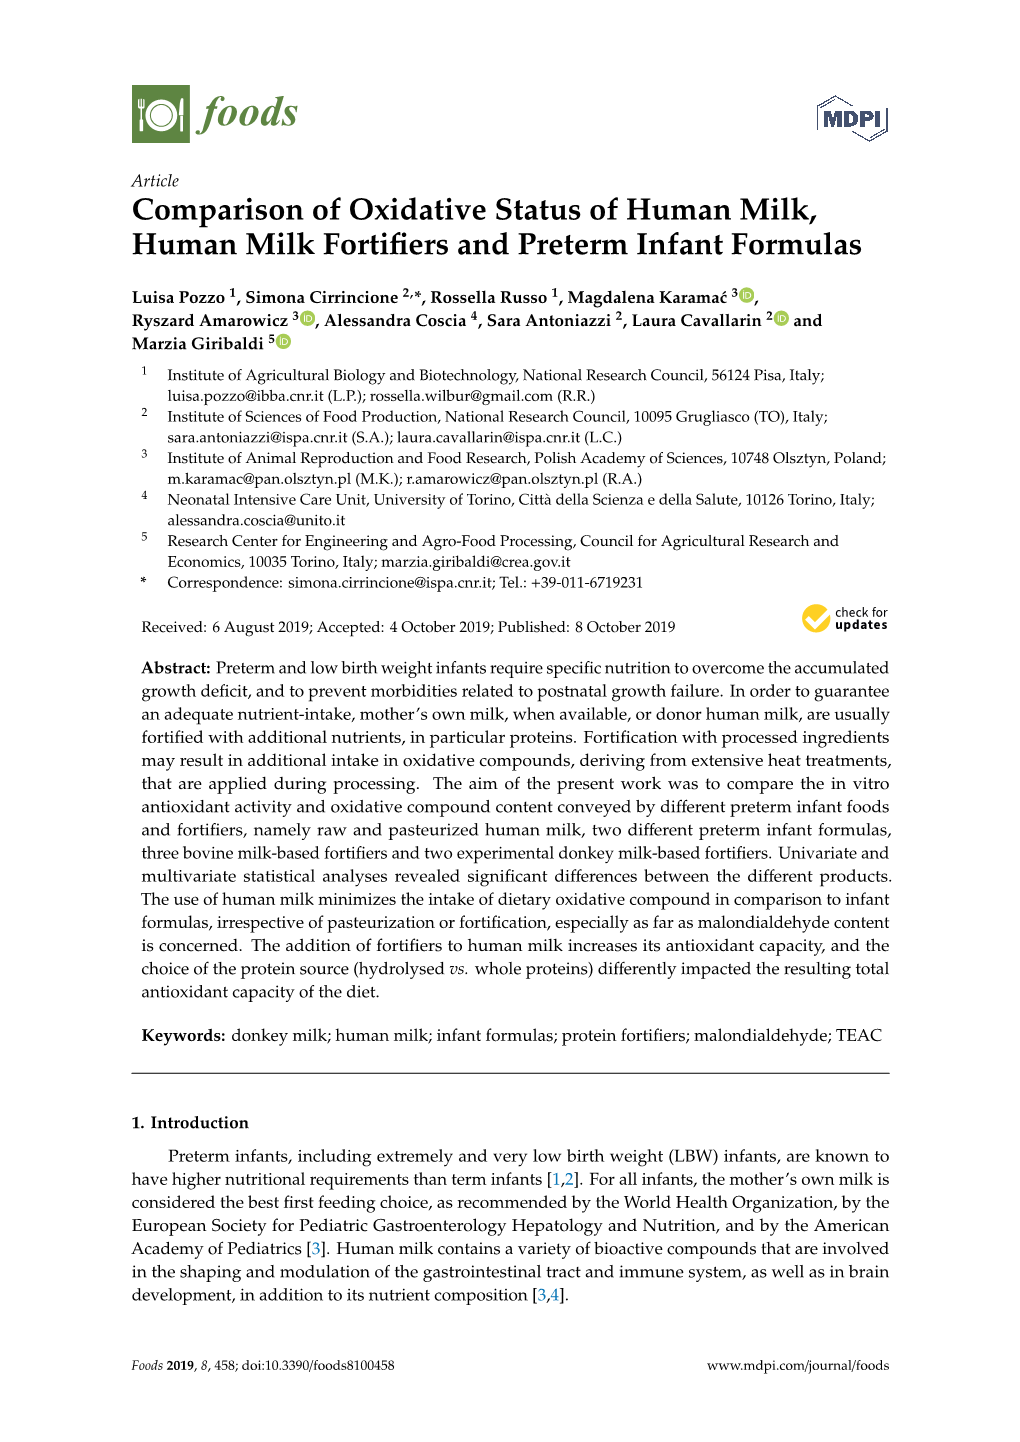 Comparison of Oxidative Status of Human Milk, Human Milk Fortifiers